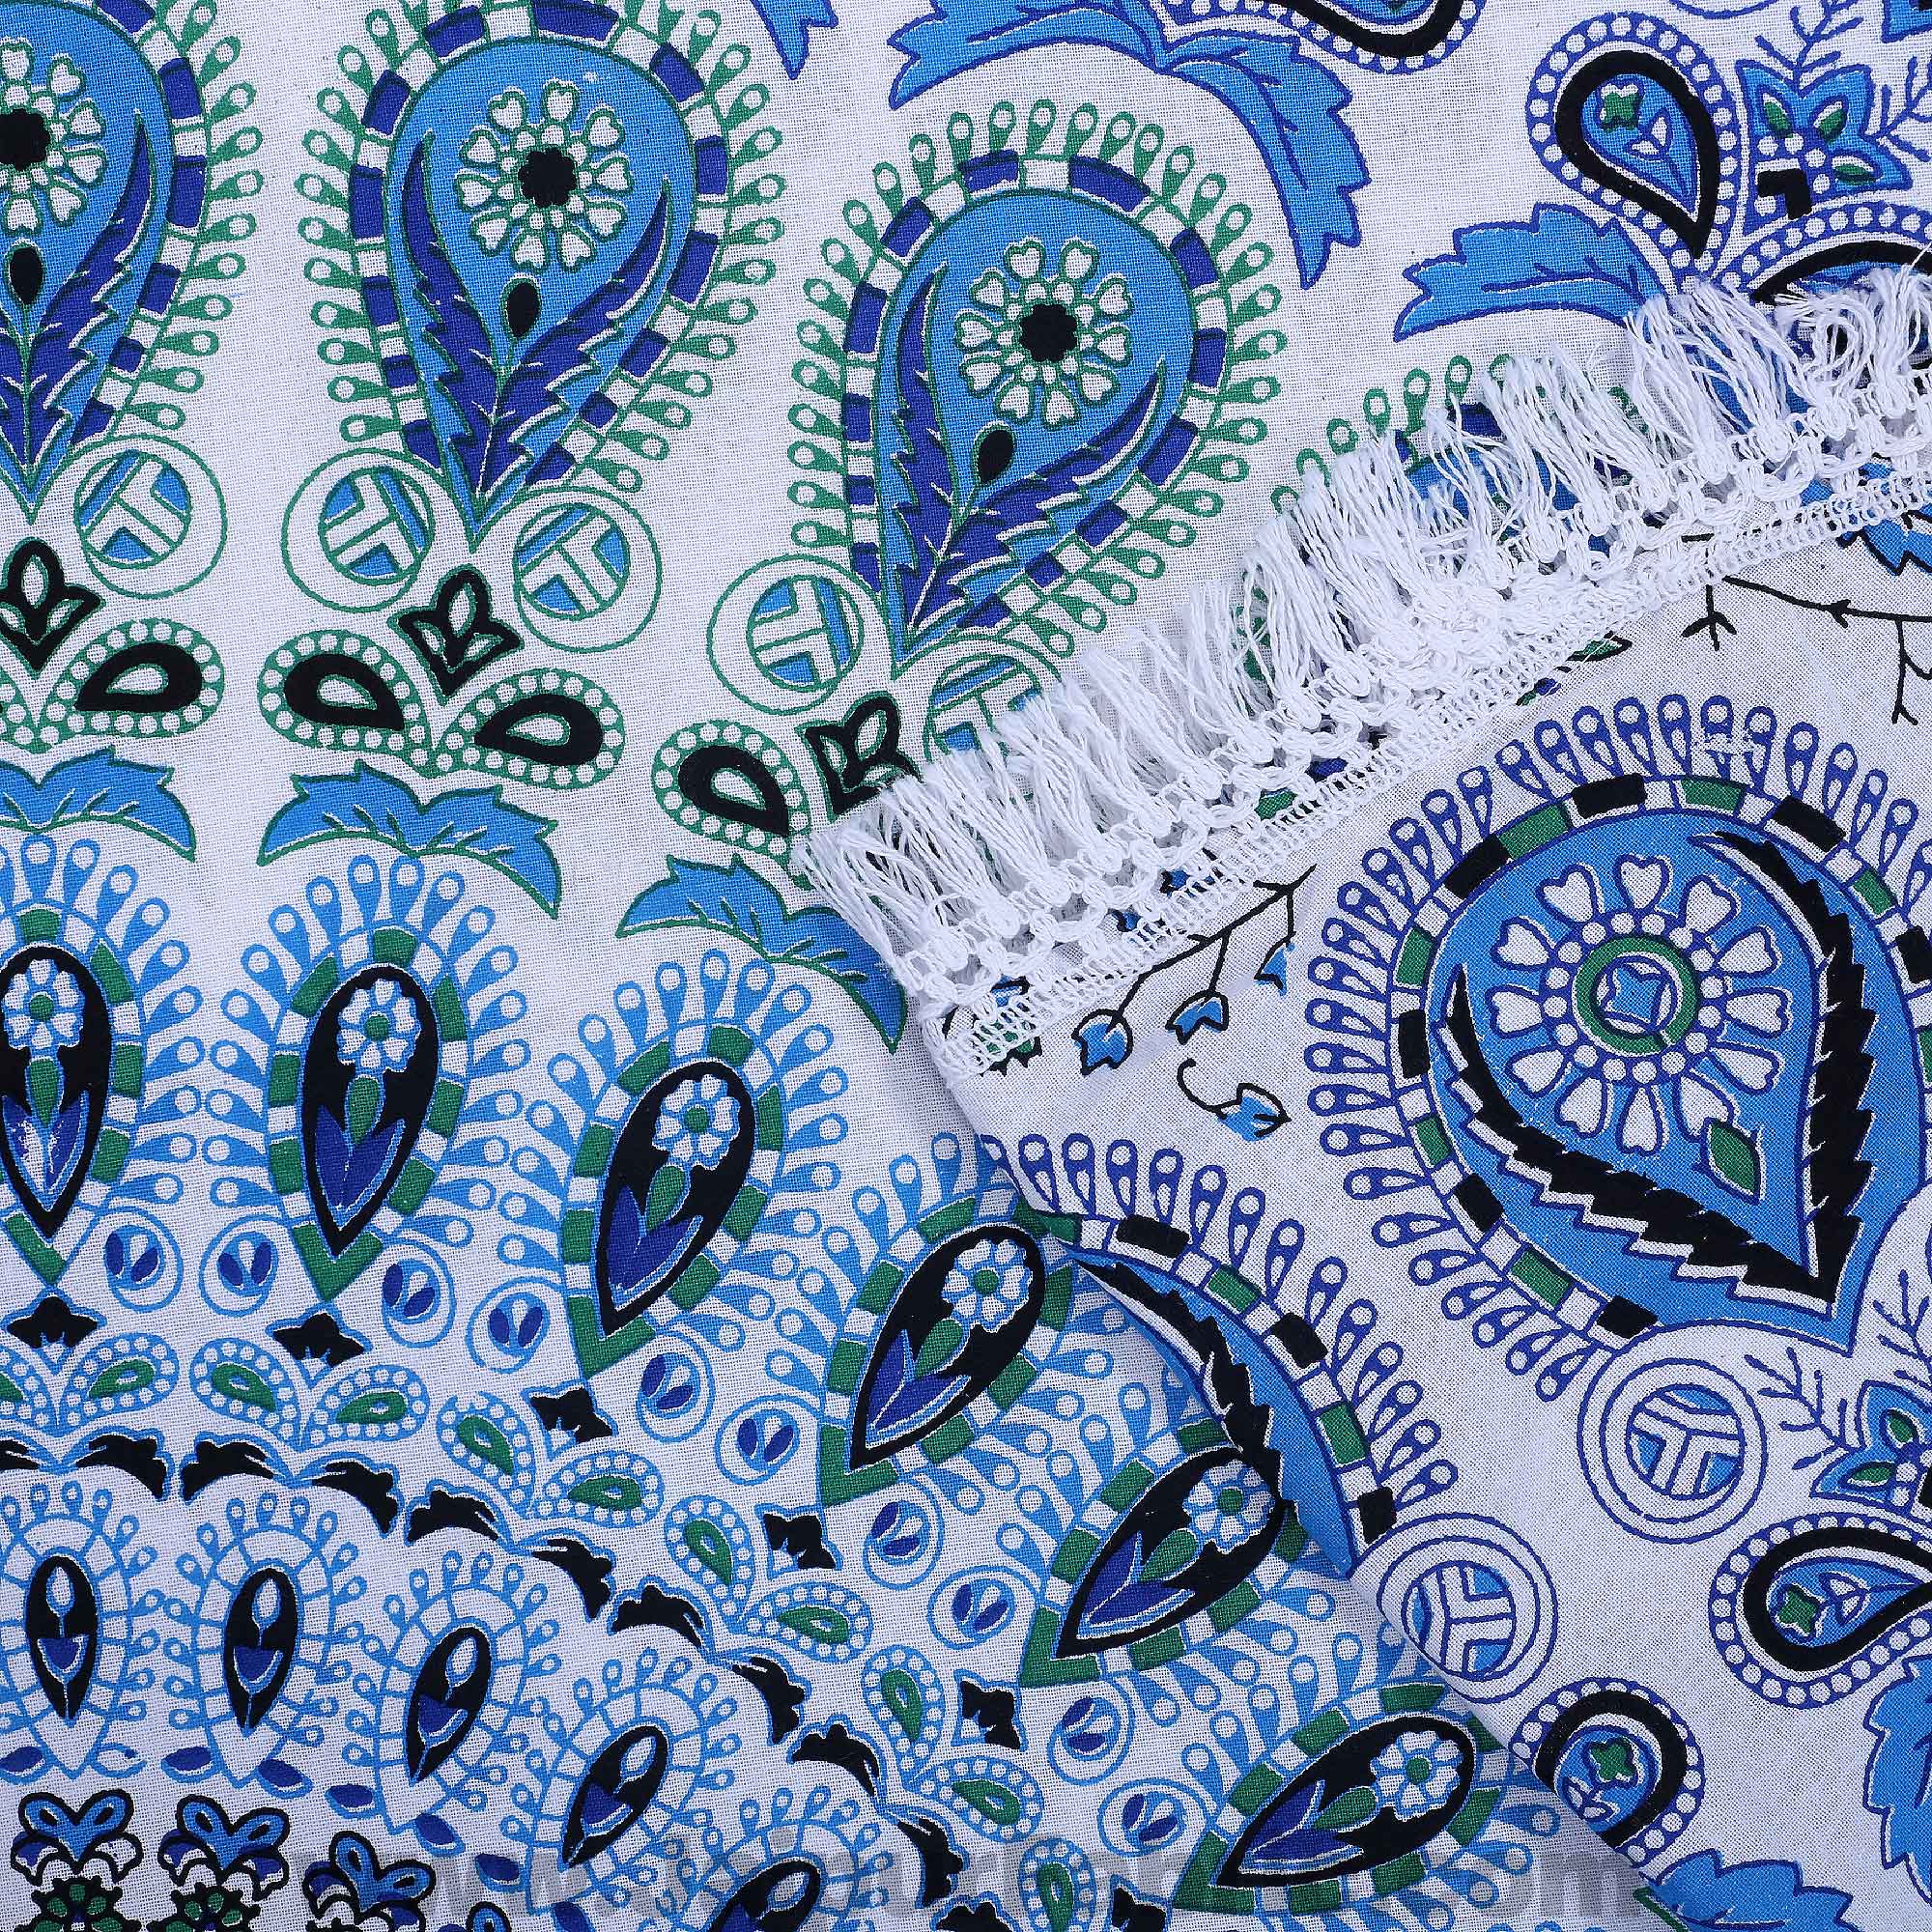 Blue Mandala Printed Wall Hanging Round Roundies Beach Throw Cotton Yoga Mat Table Cloths Table Cover Picnic Mat Tapestry Picnic Blanket Mat 72